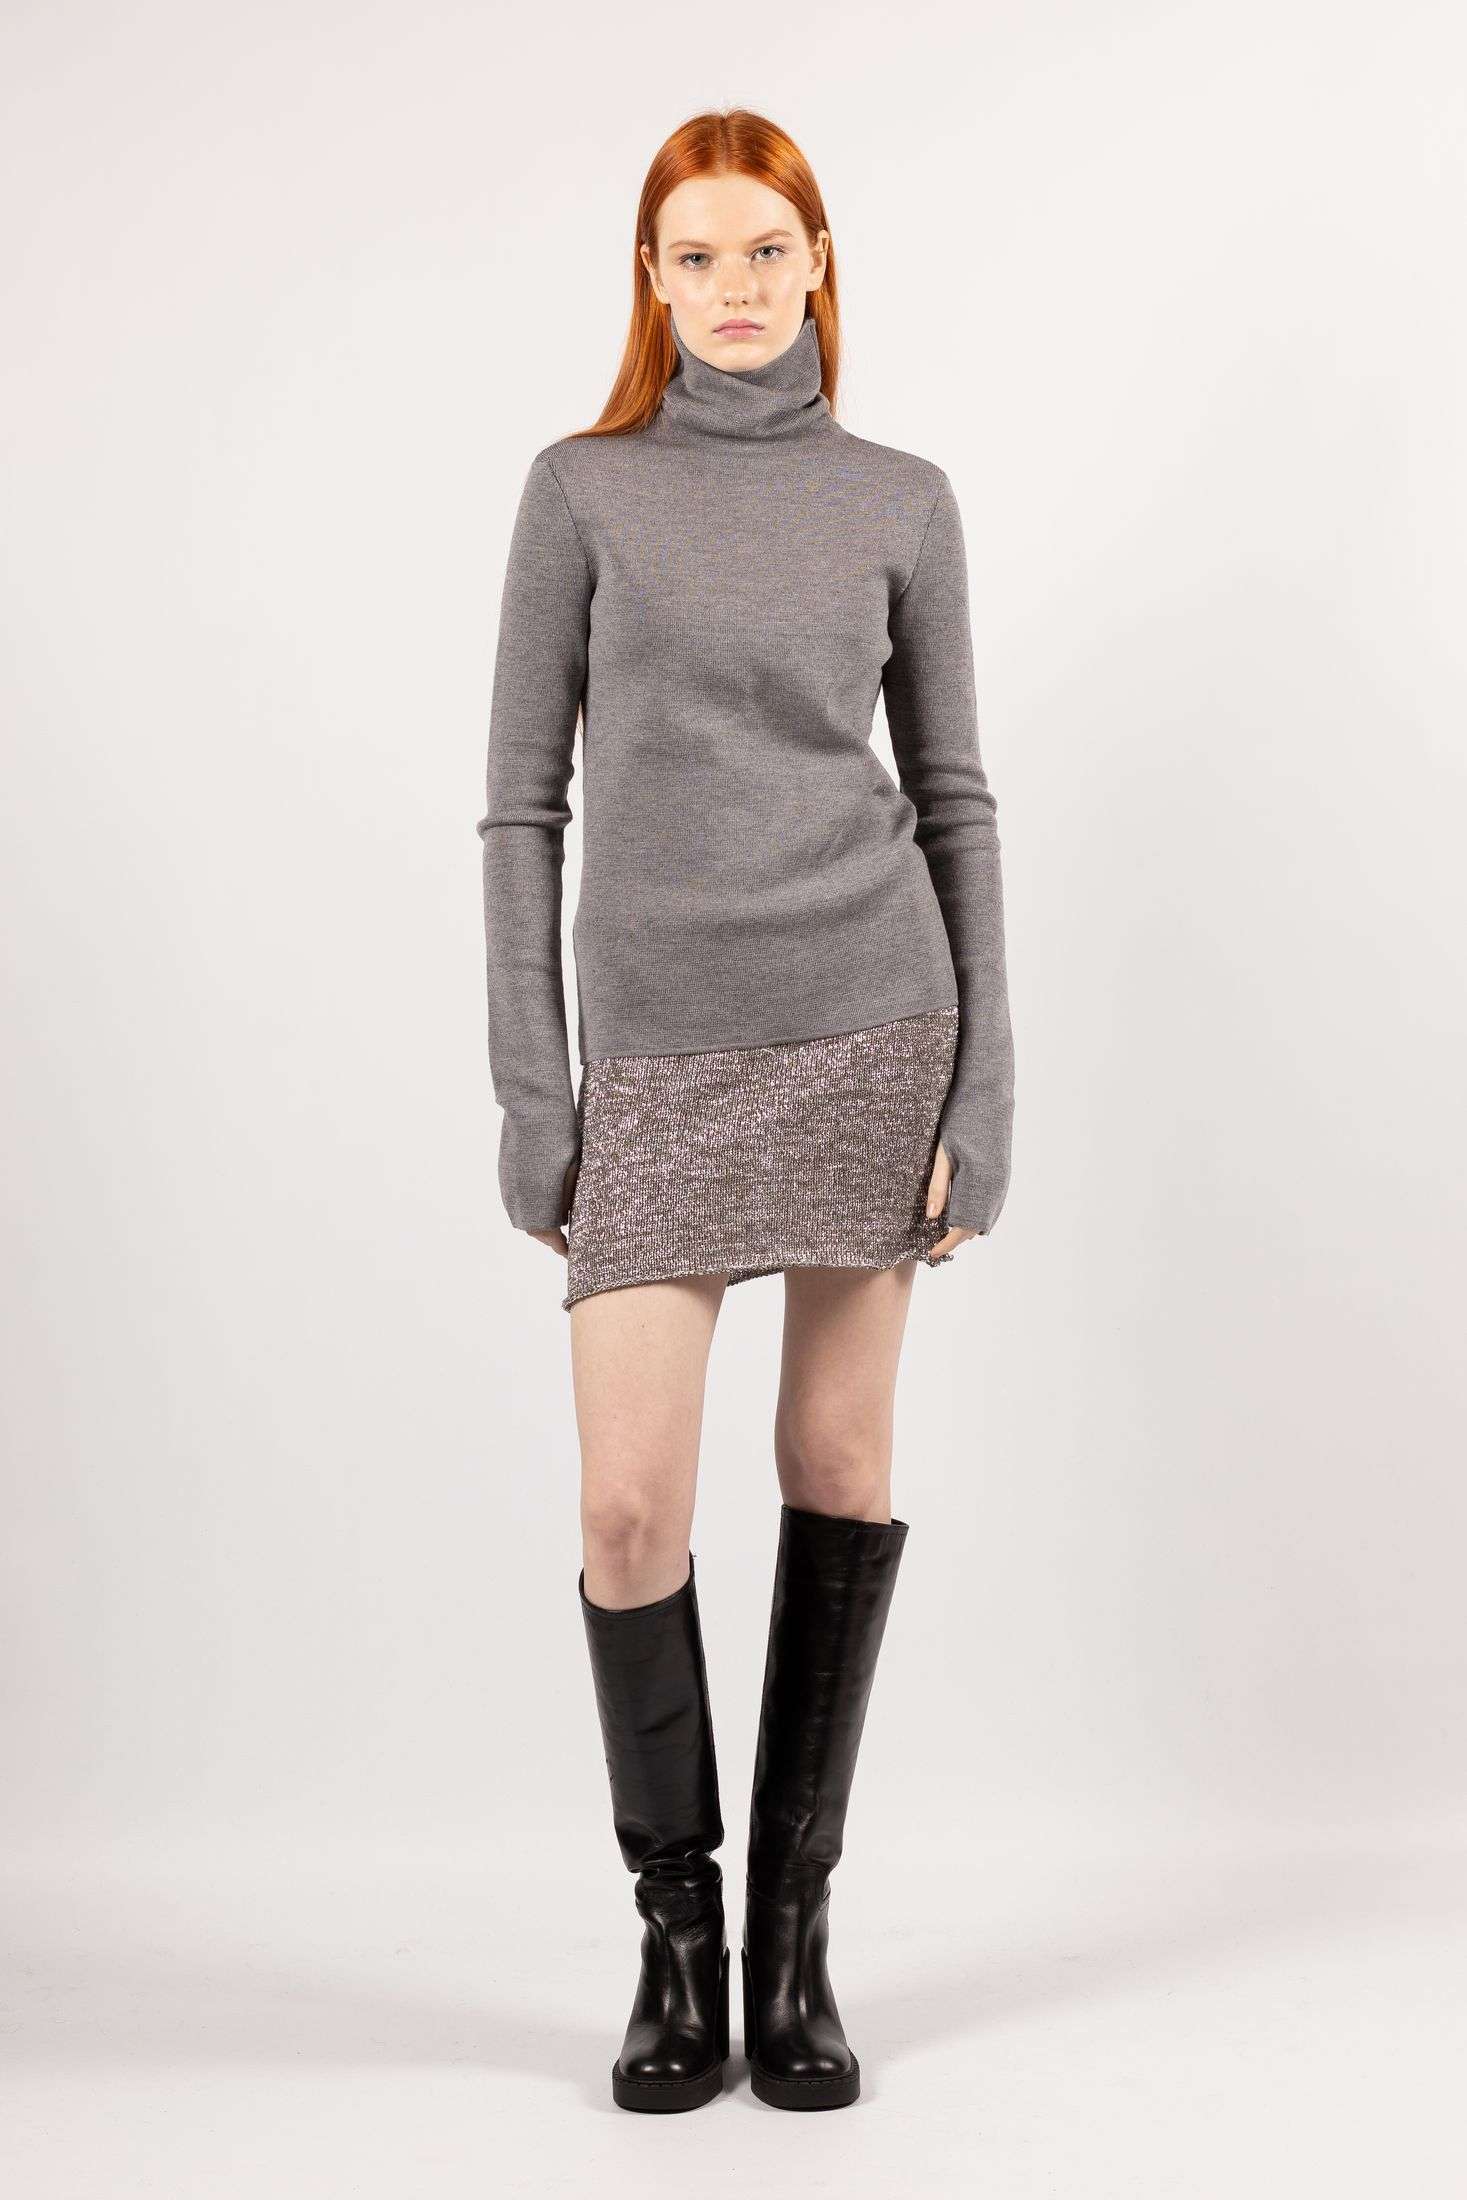 Stylish grey knit turtleneck sweater ADA - Inclusivity in Fashion